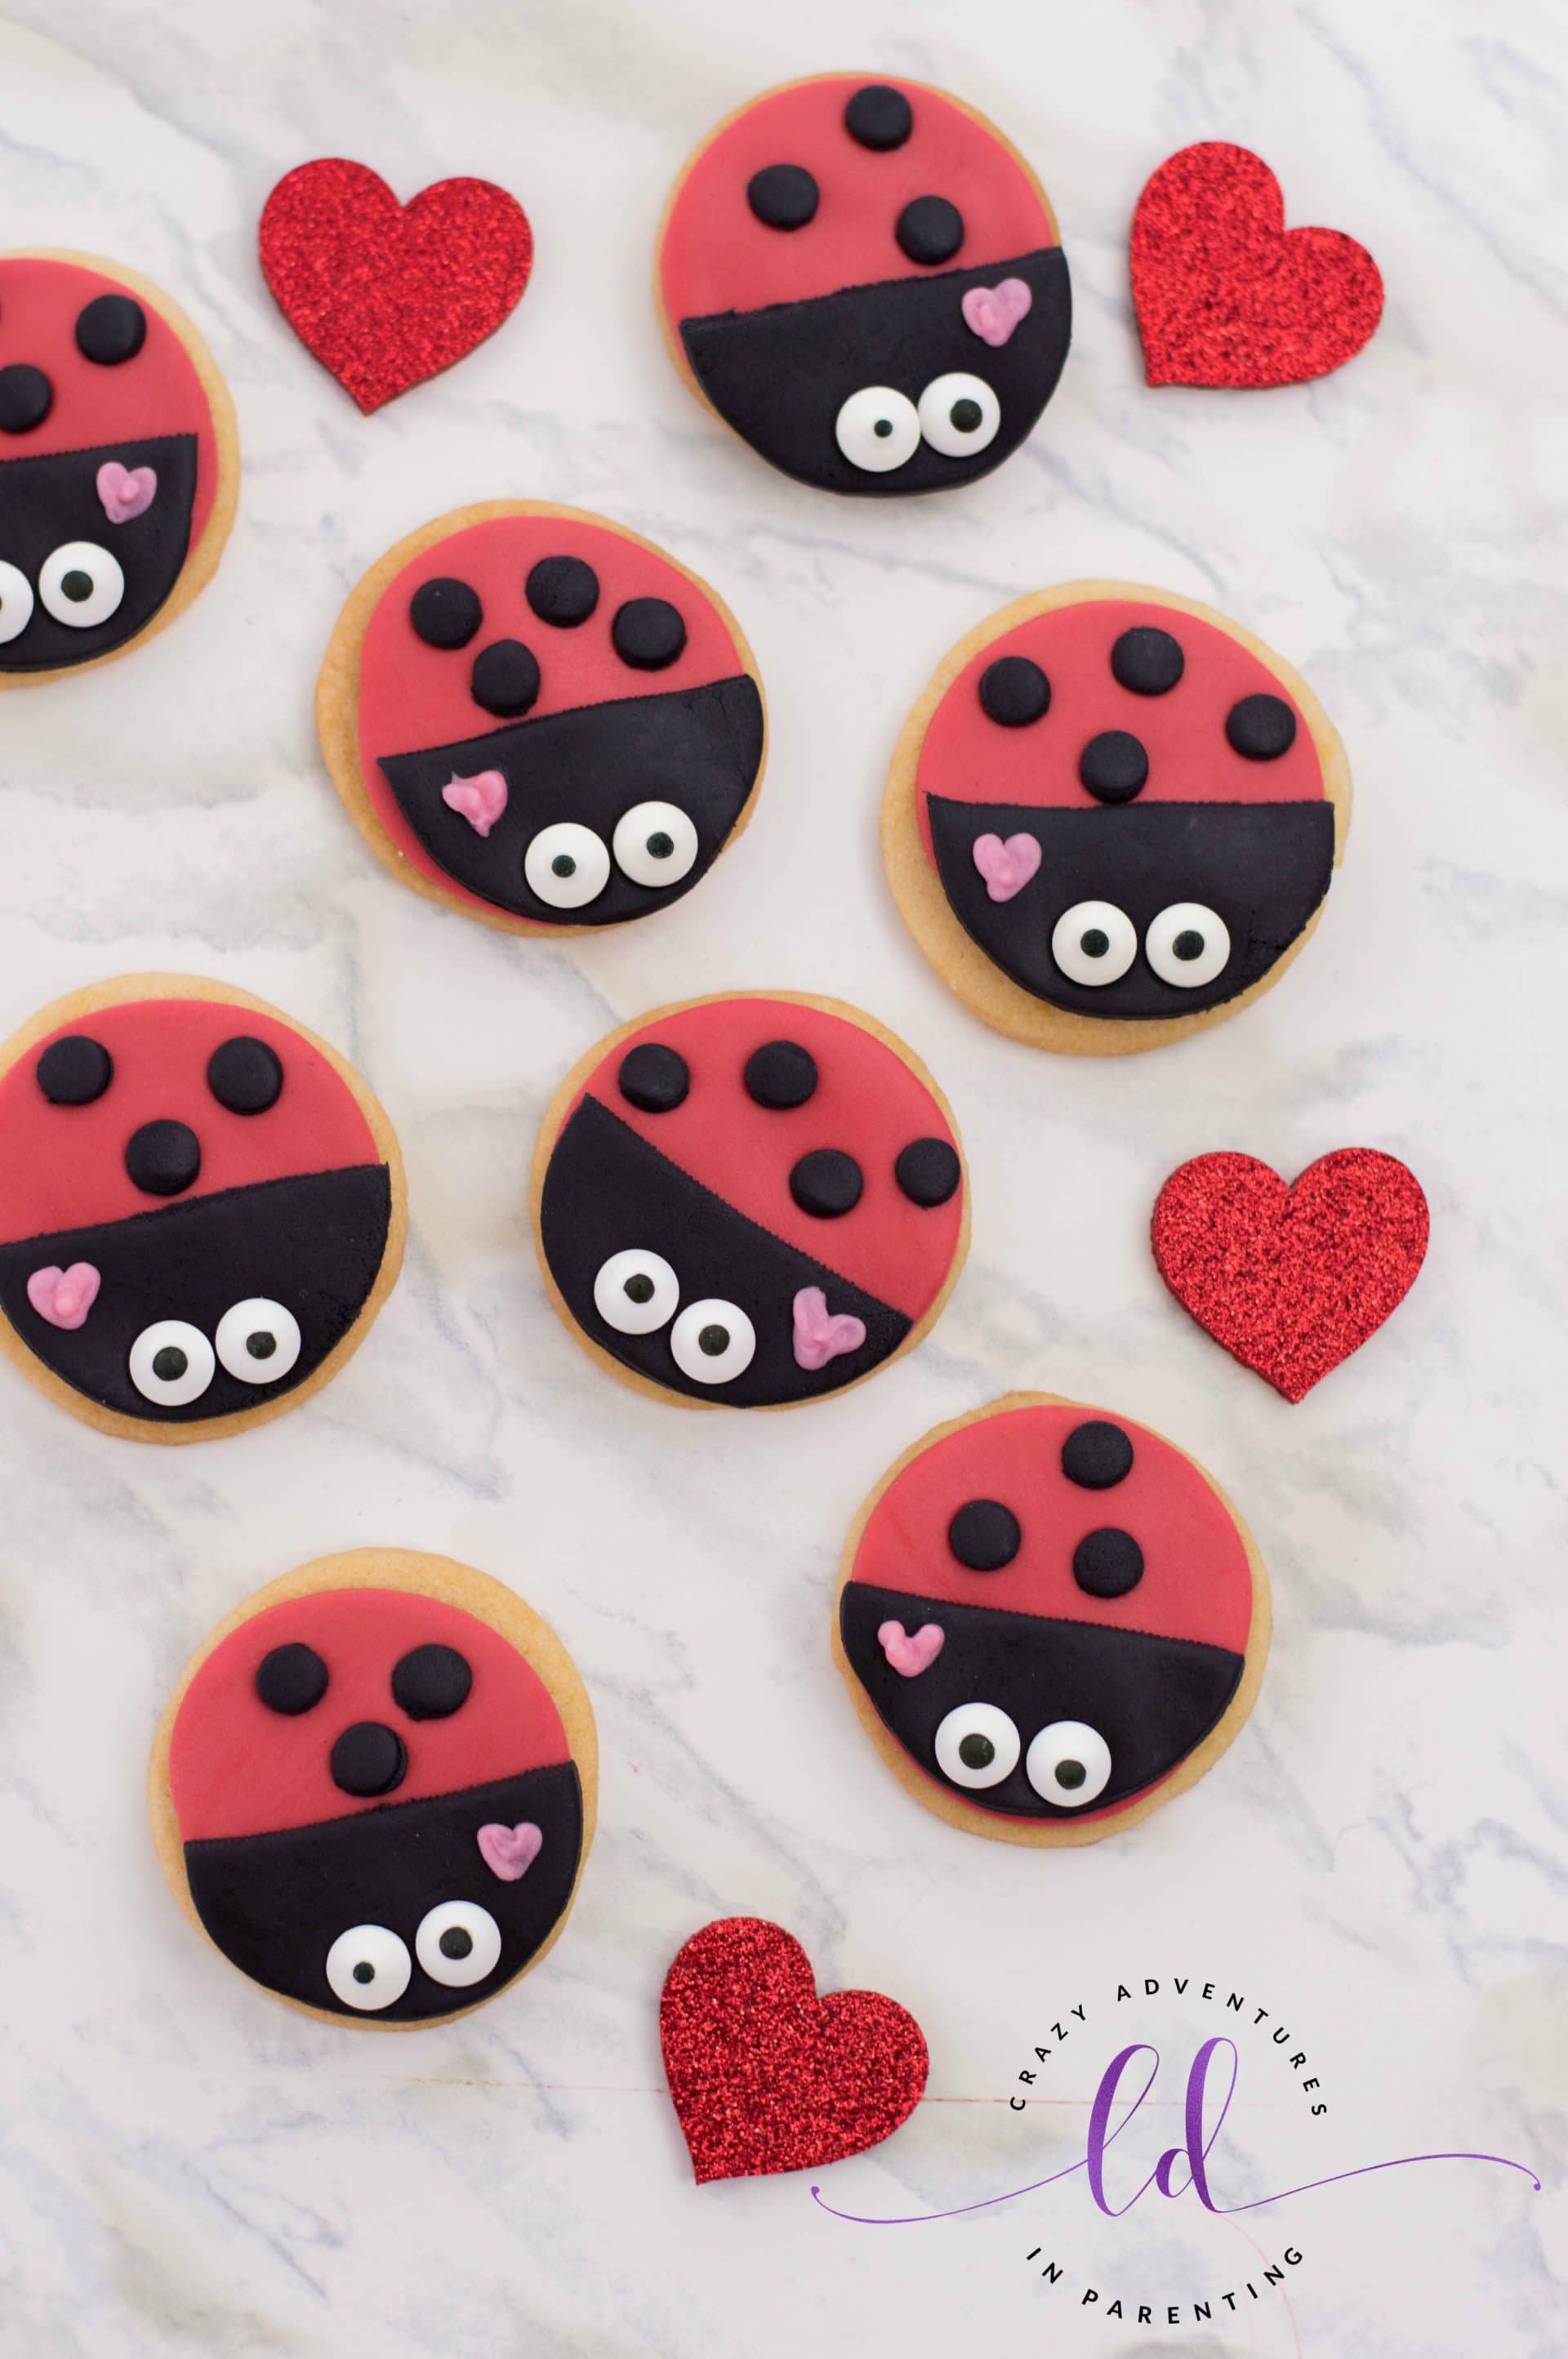 Lovebug Ladybug Cookies for Valentine's Day